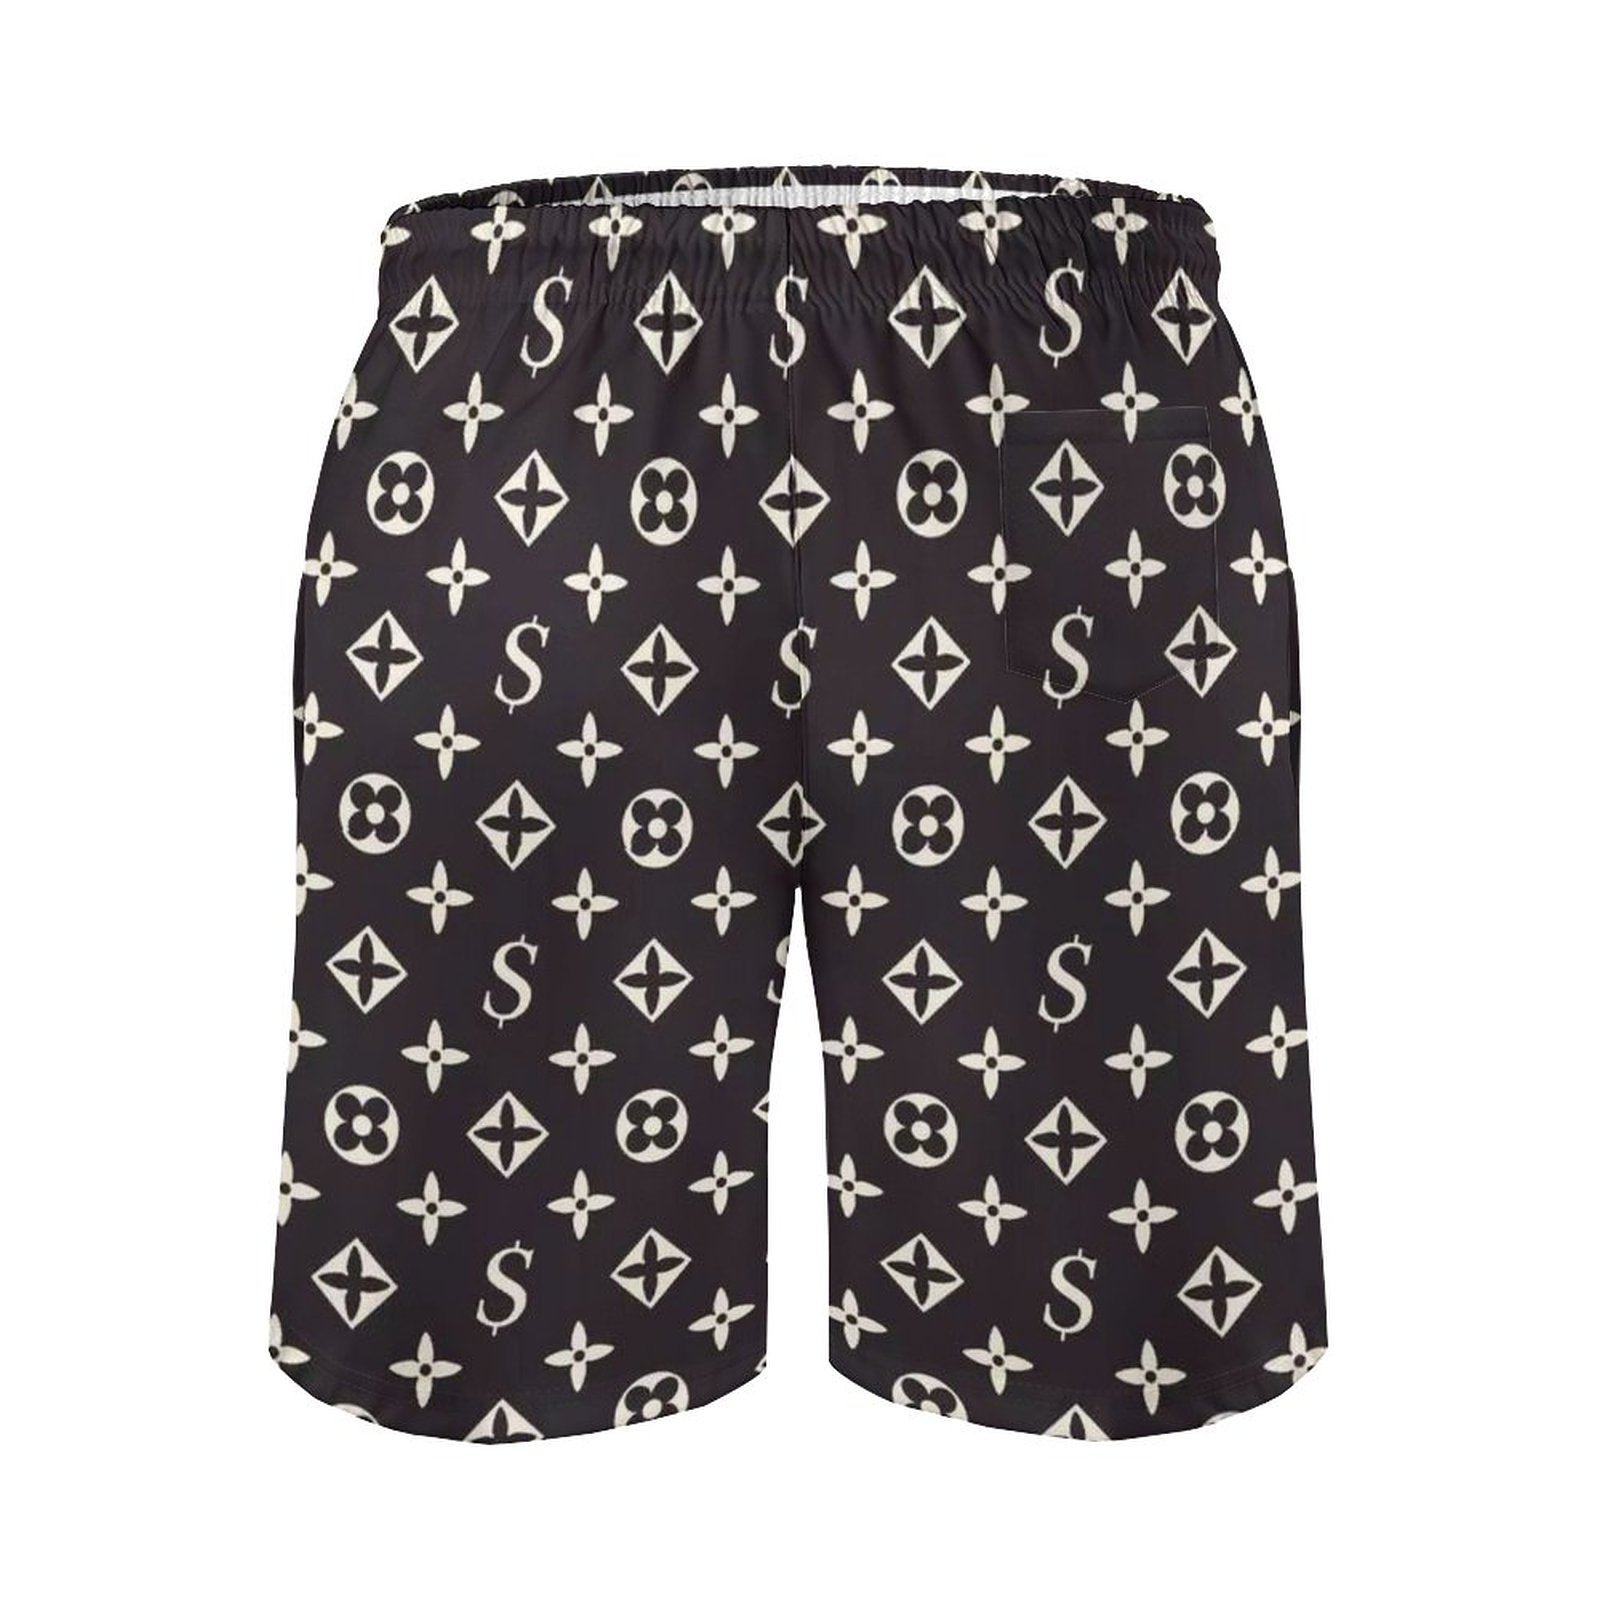 New Mens Beach Swim Shorts Printed Quick Dry Short Swim Trunks Swimming Shorts Beachwear for Male Plus Size s-3XL DK6